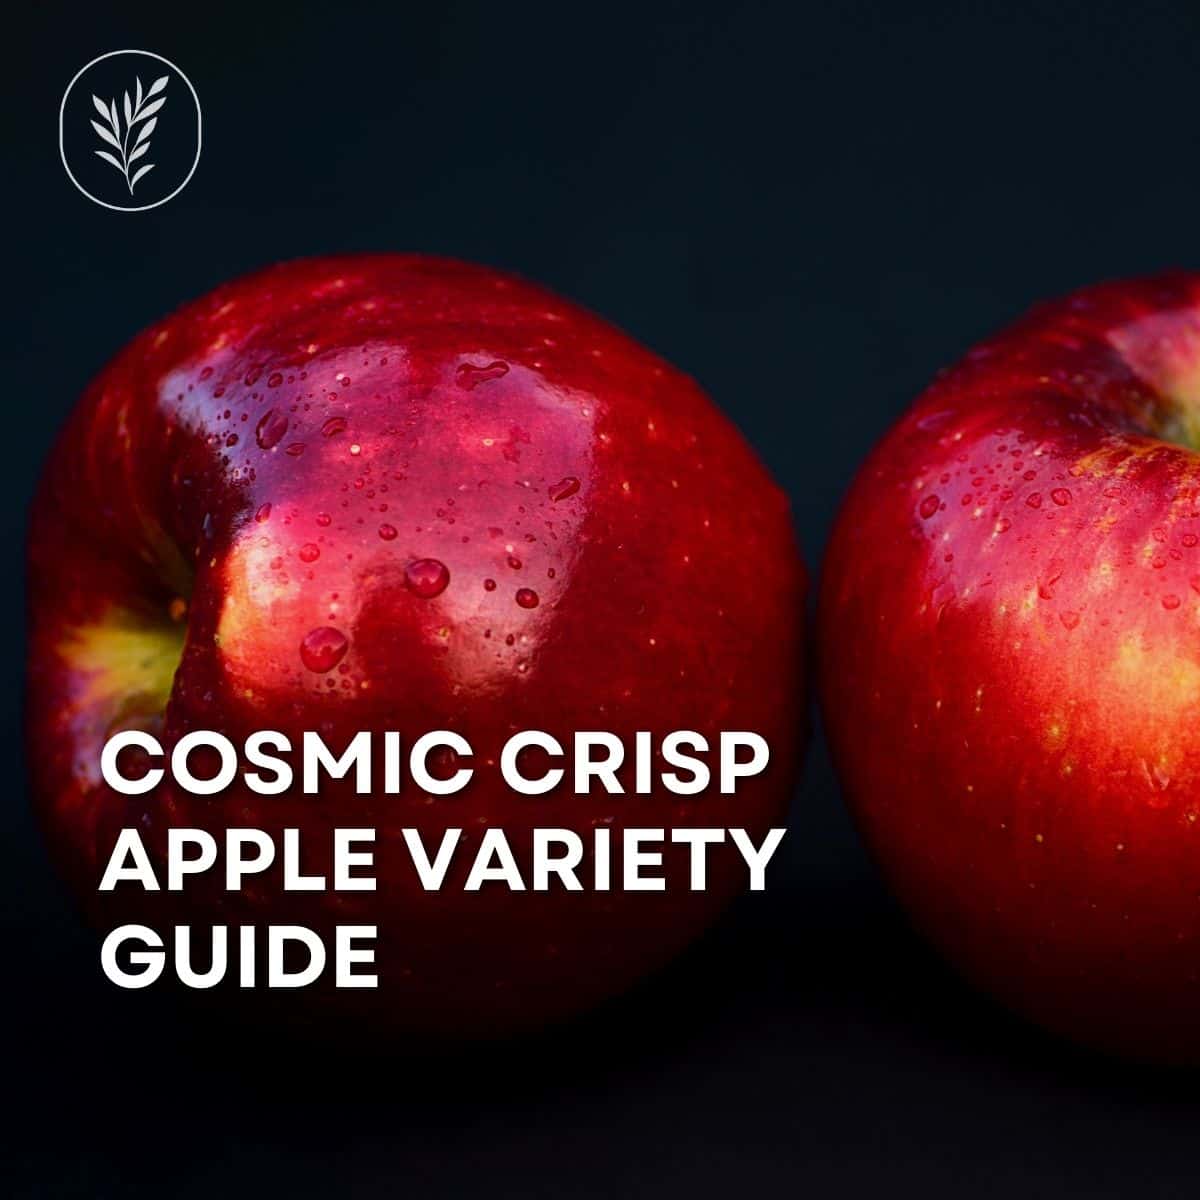 Cosmic crisp apple via @home4theharvest